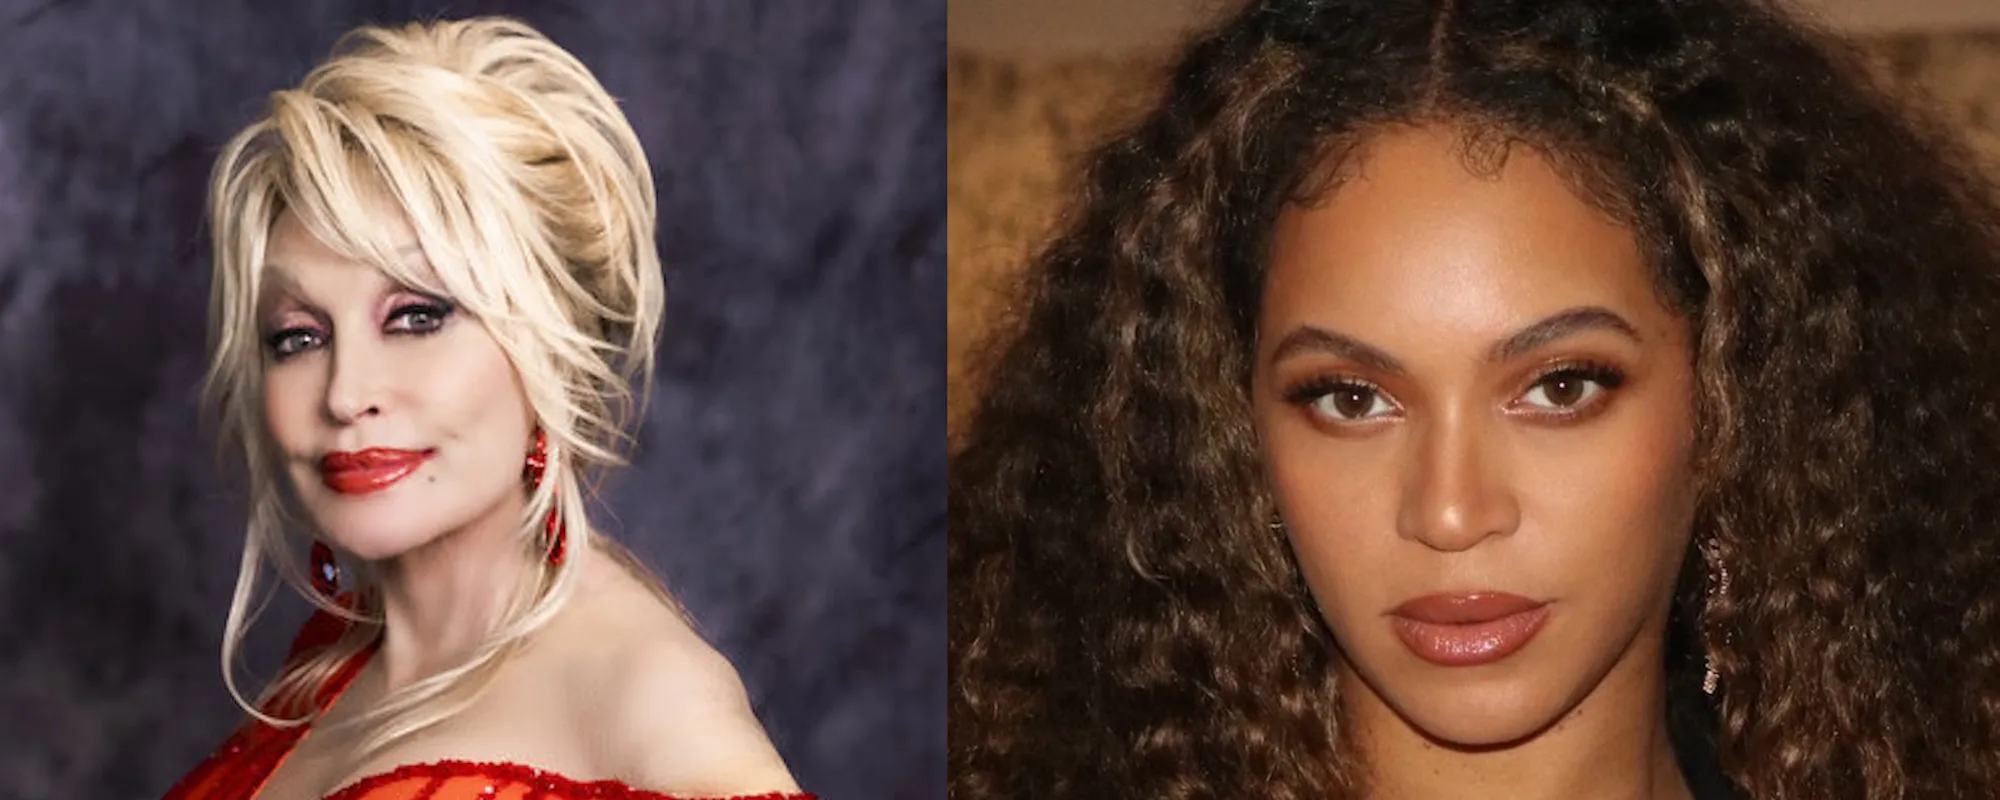 Dolly Parton Wants Beyoncé to Cover “Jolene”